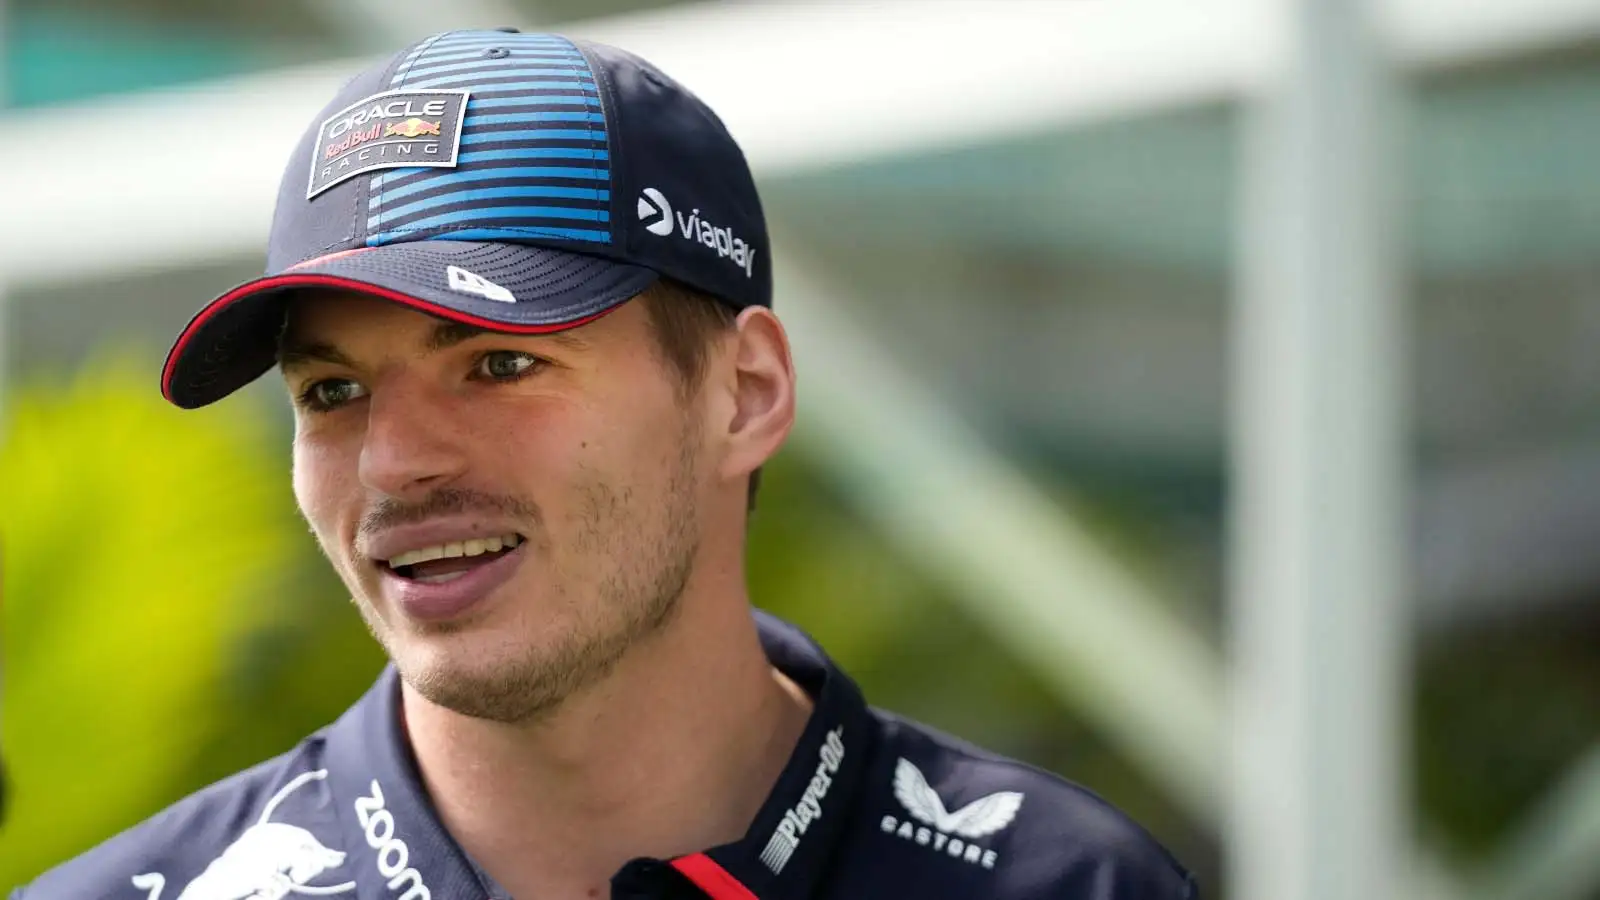 Miami Grand Prix: Max Verstappen takes P1 as five constructors fill top five places